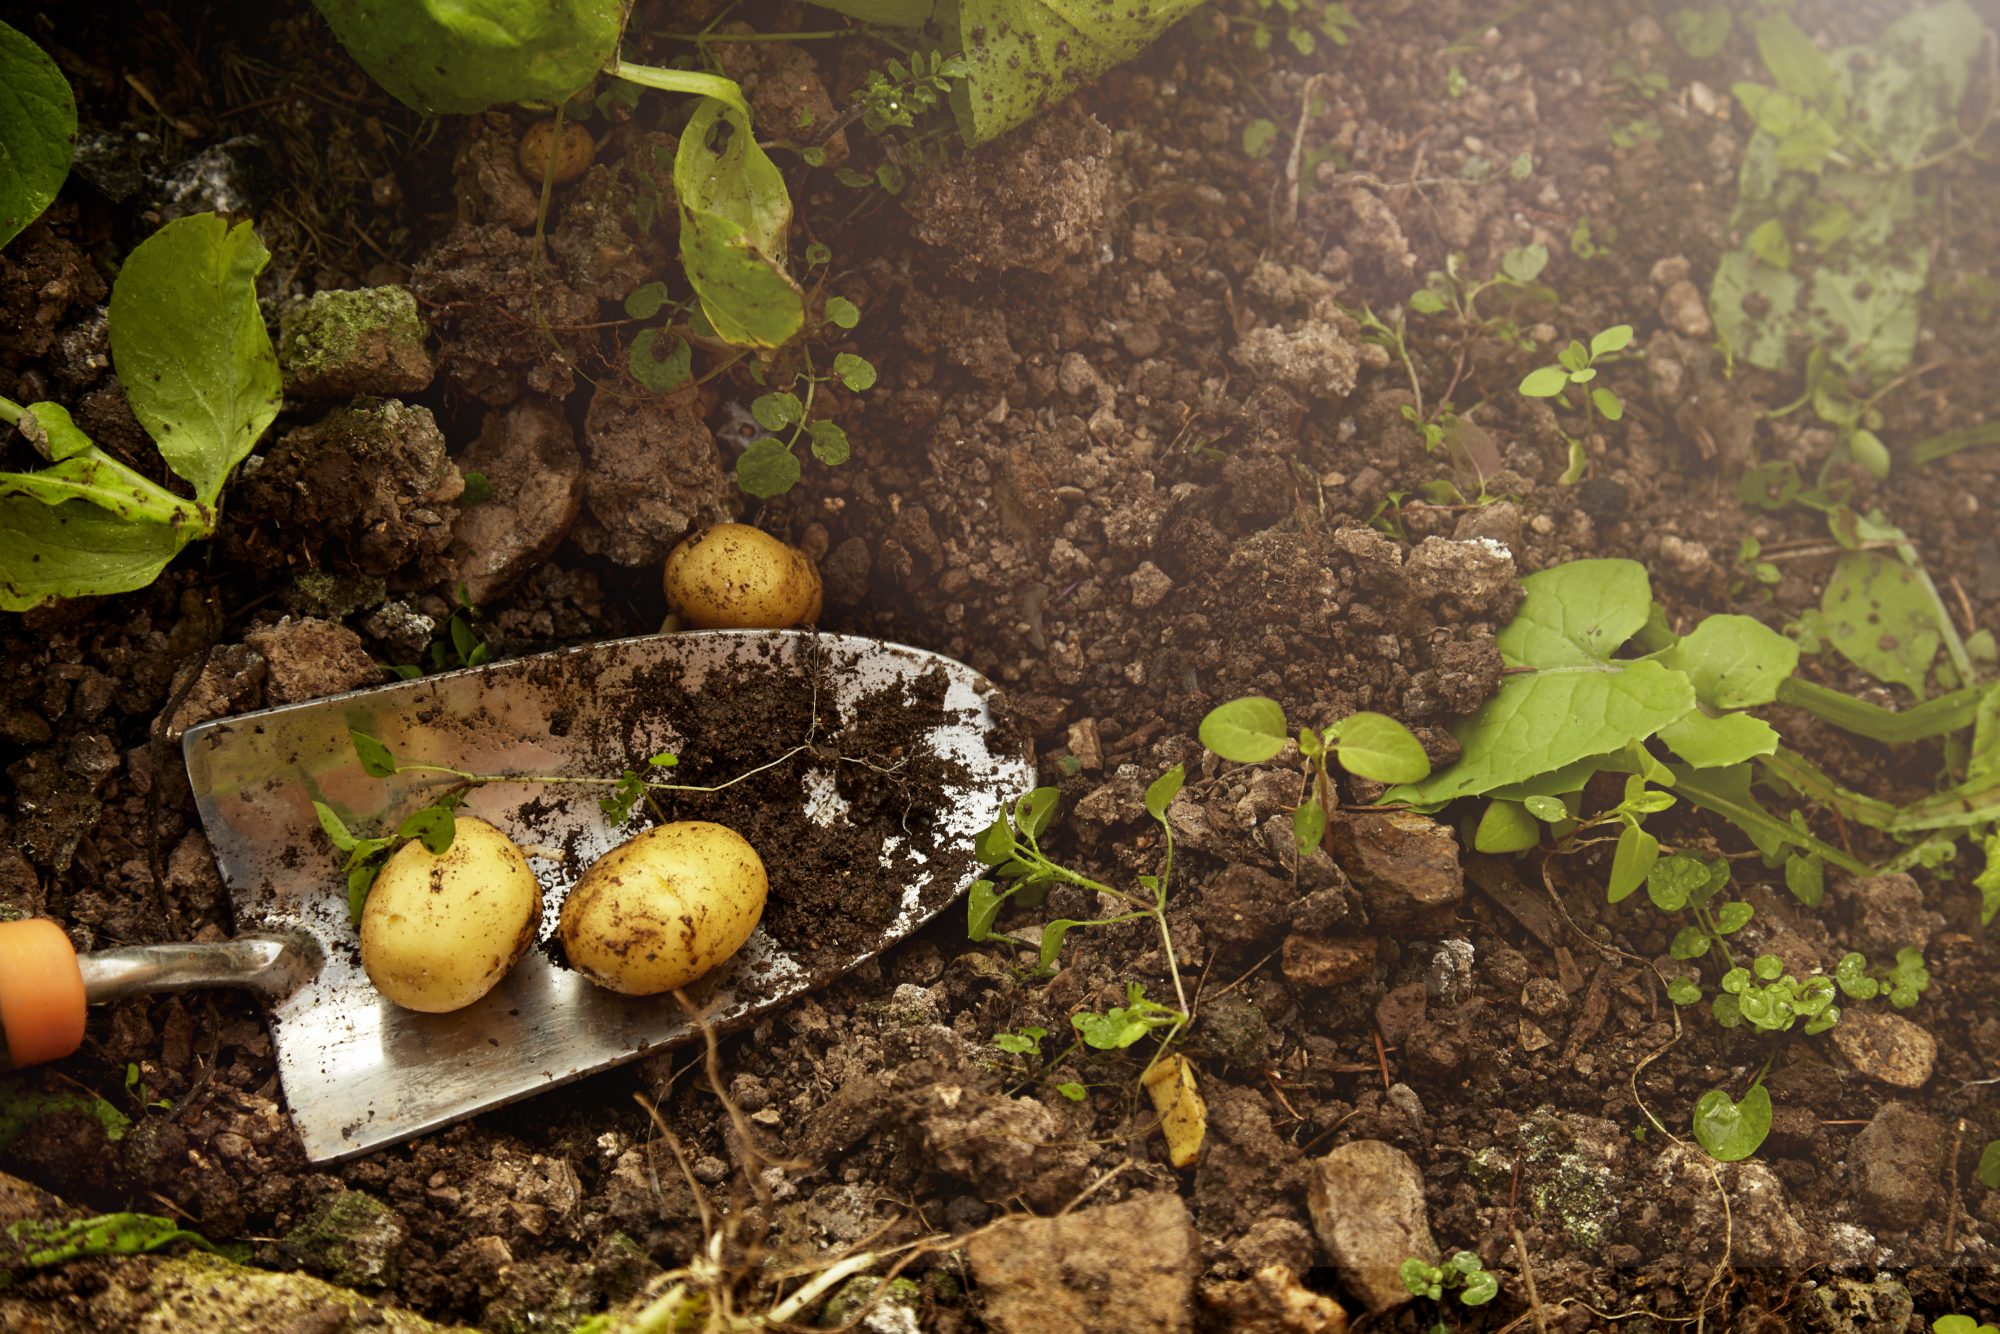 Potato in Soil Getty 4/16/20